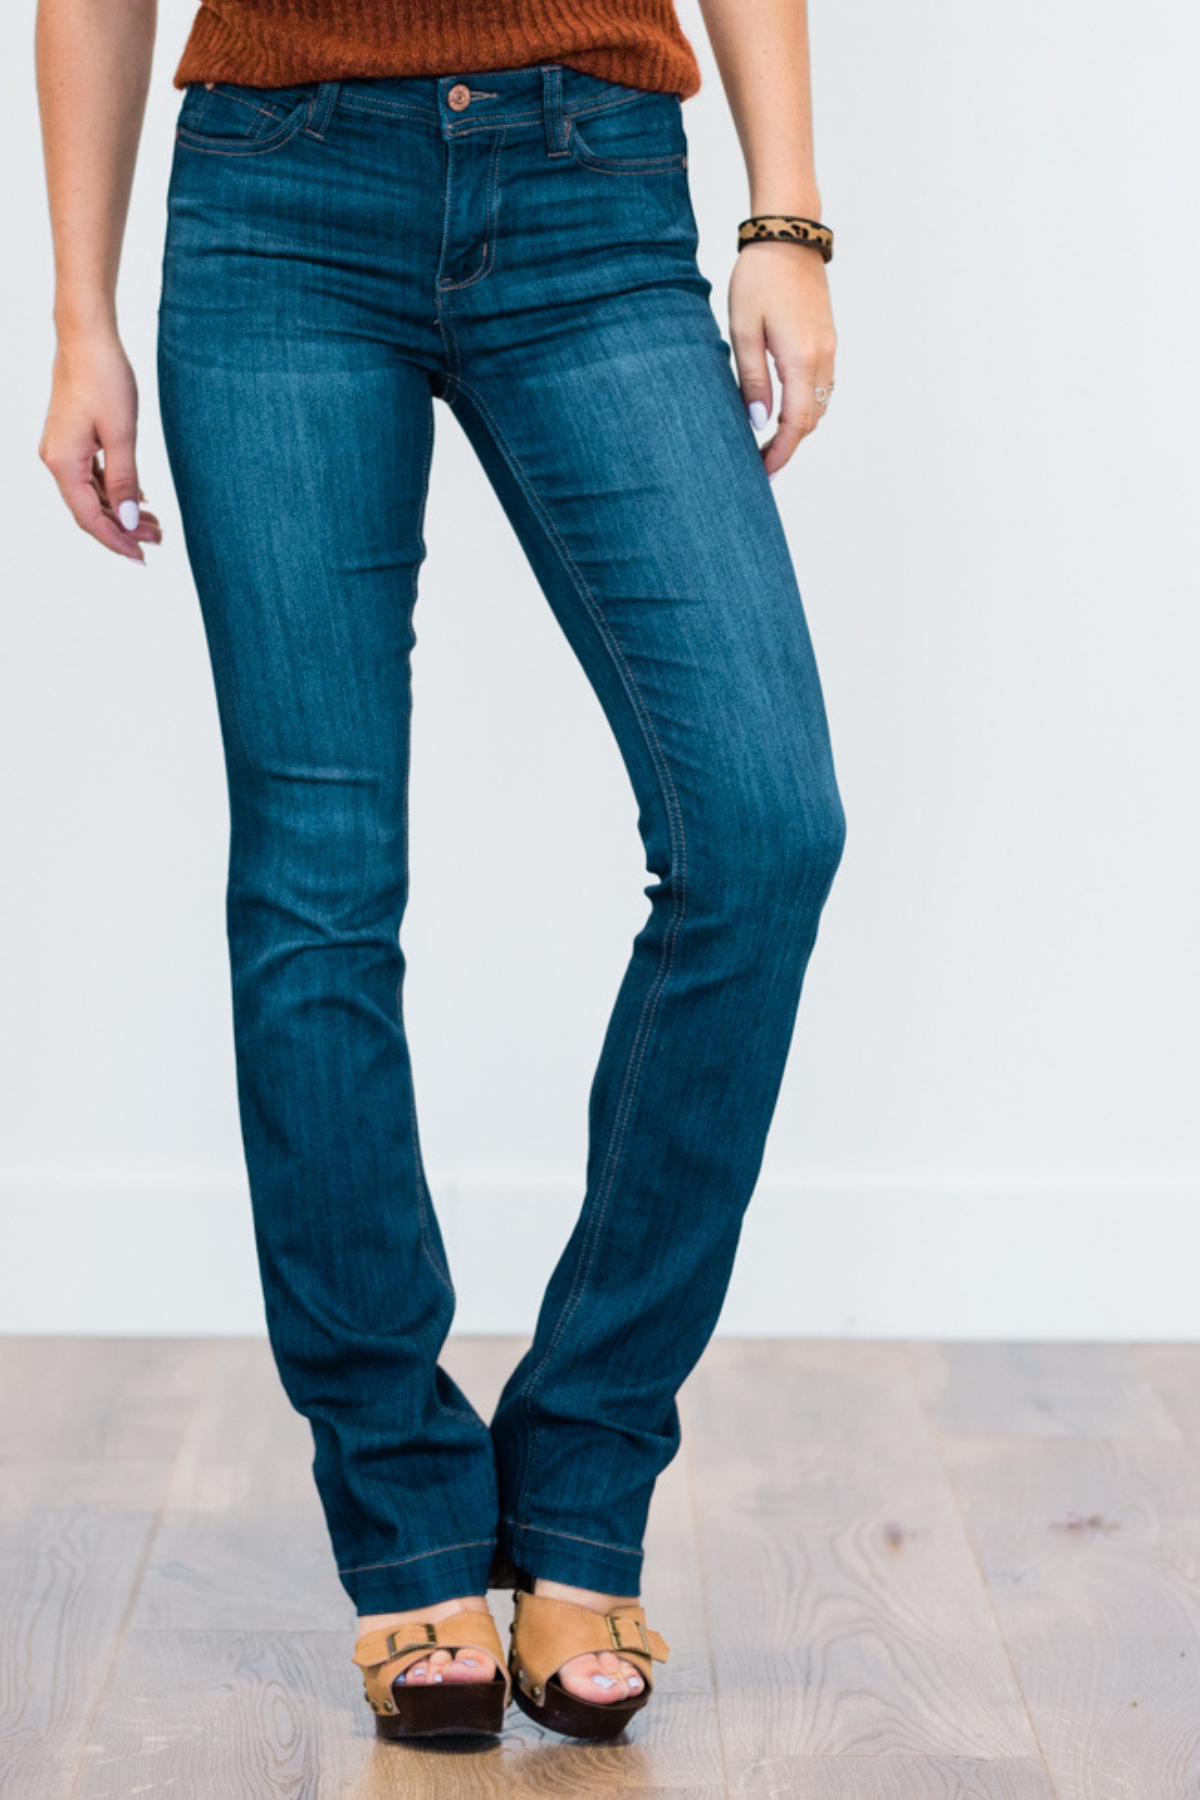 Modeled Jeans